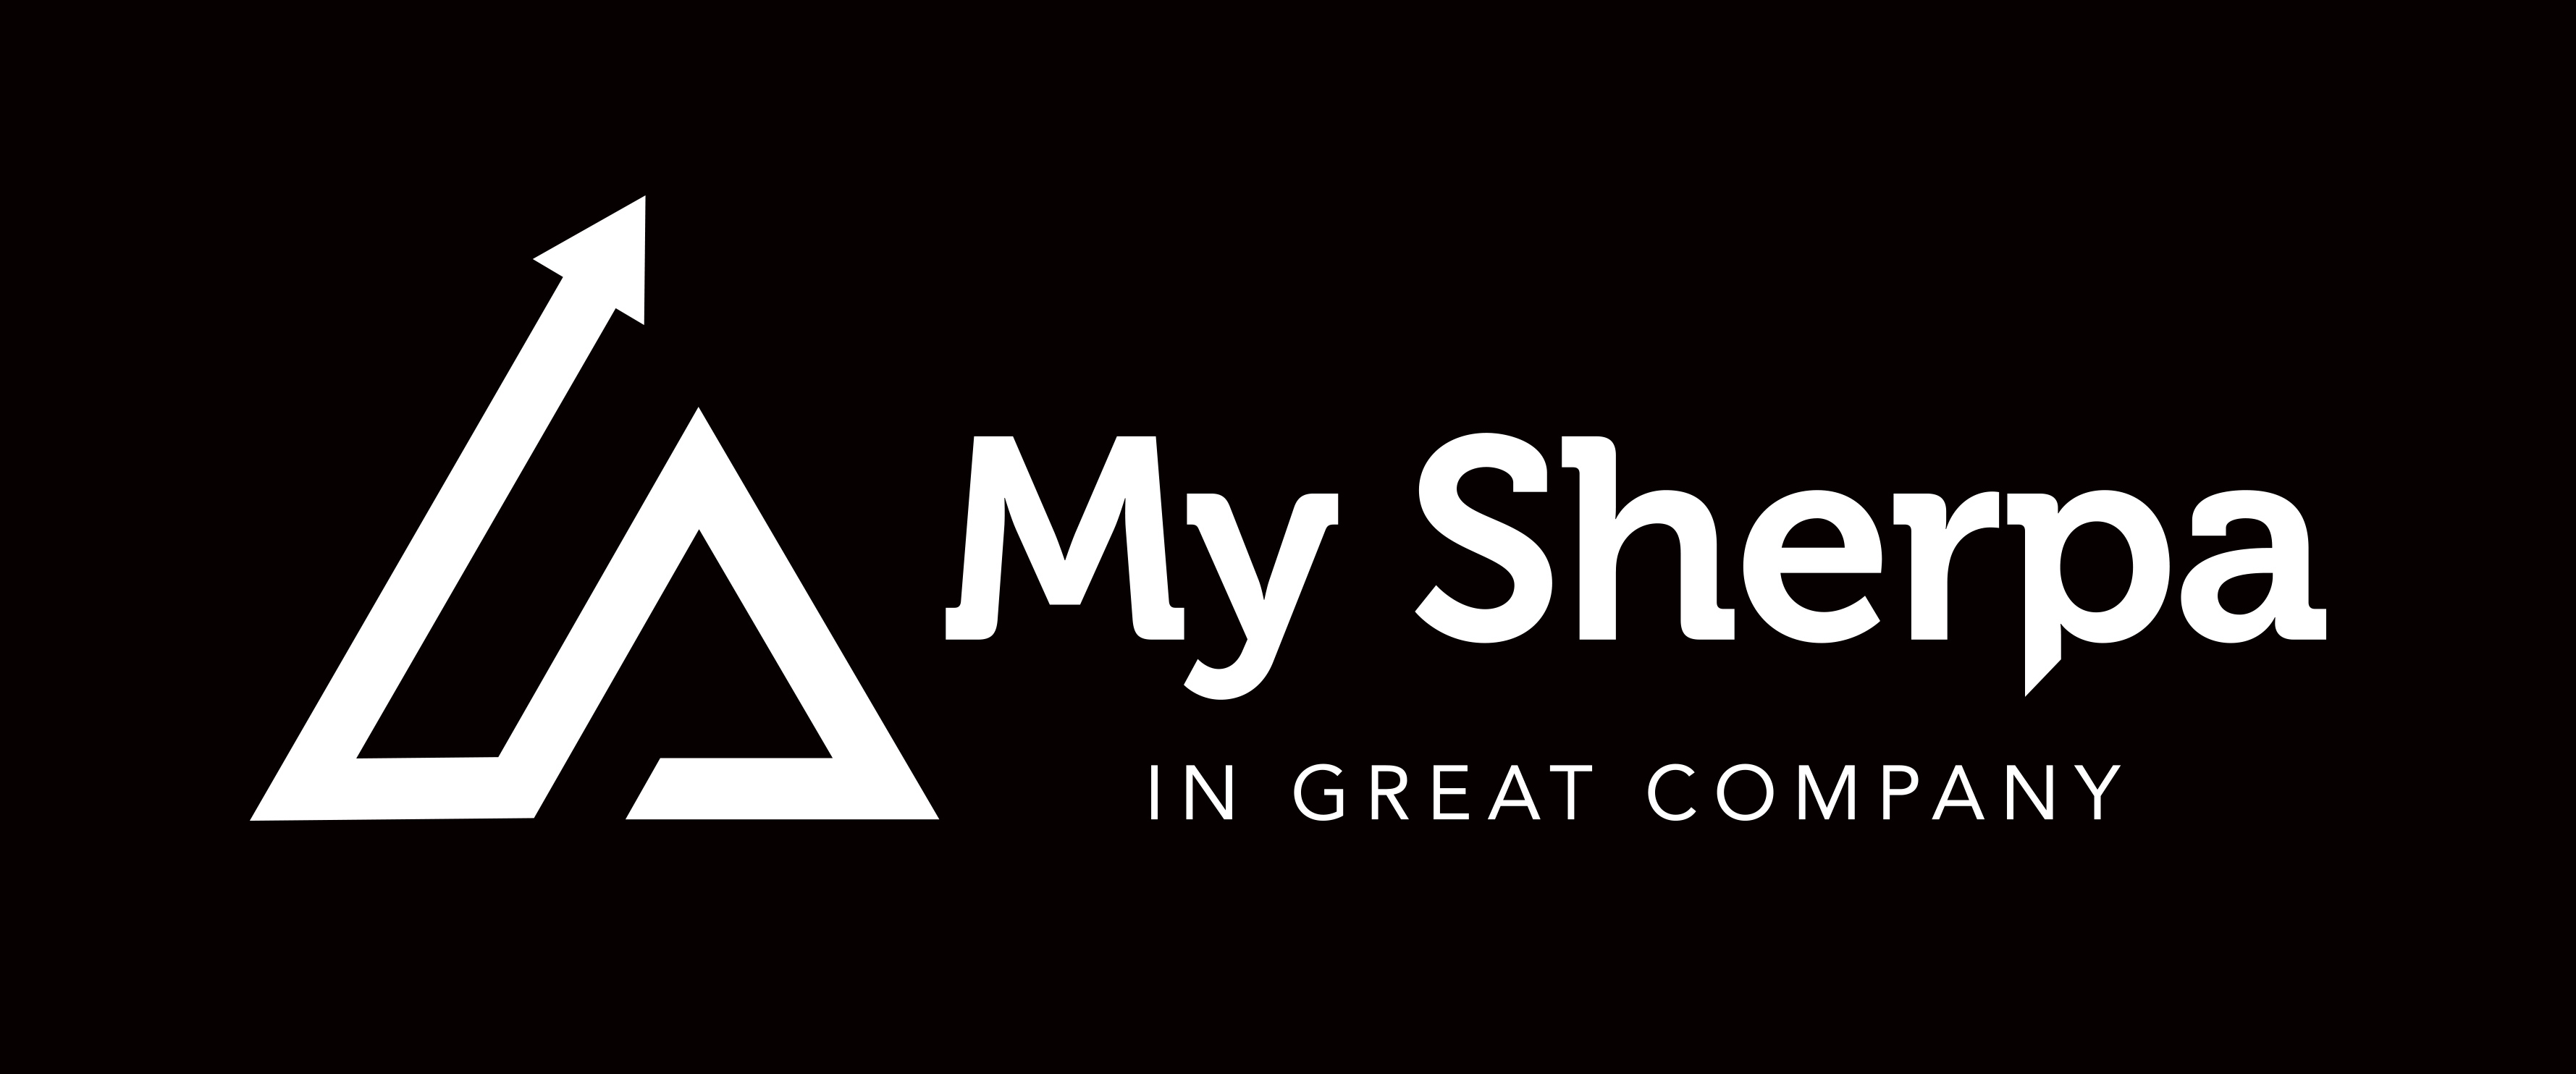 My Sherpa Ltd